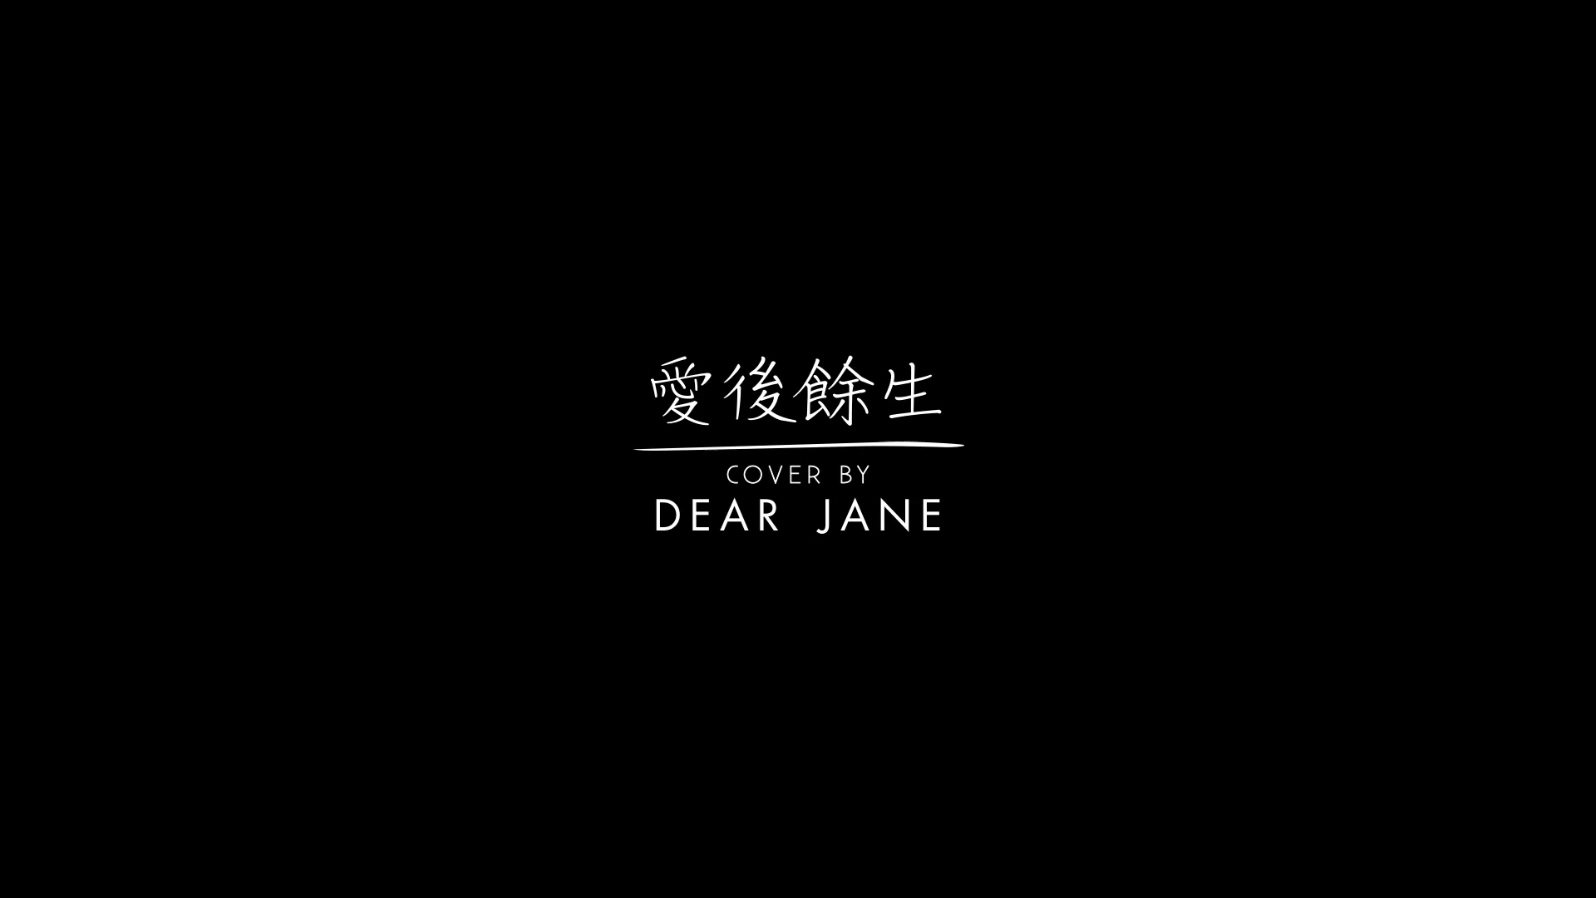 Dear Jane Studio Live - 爱後余生